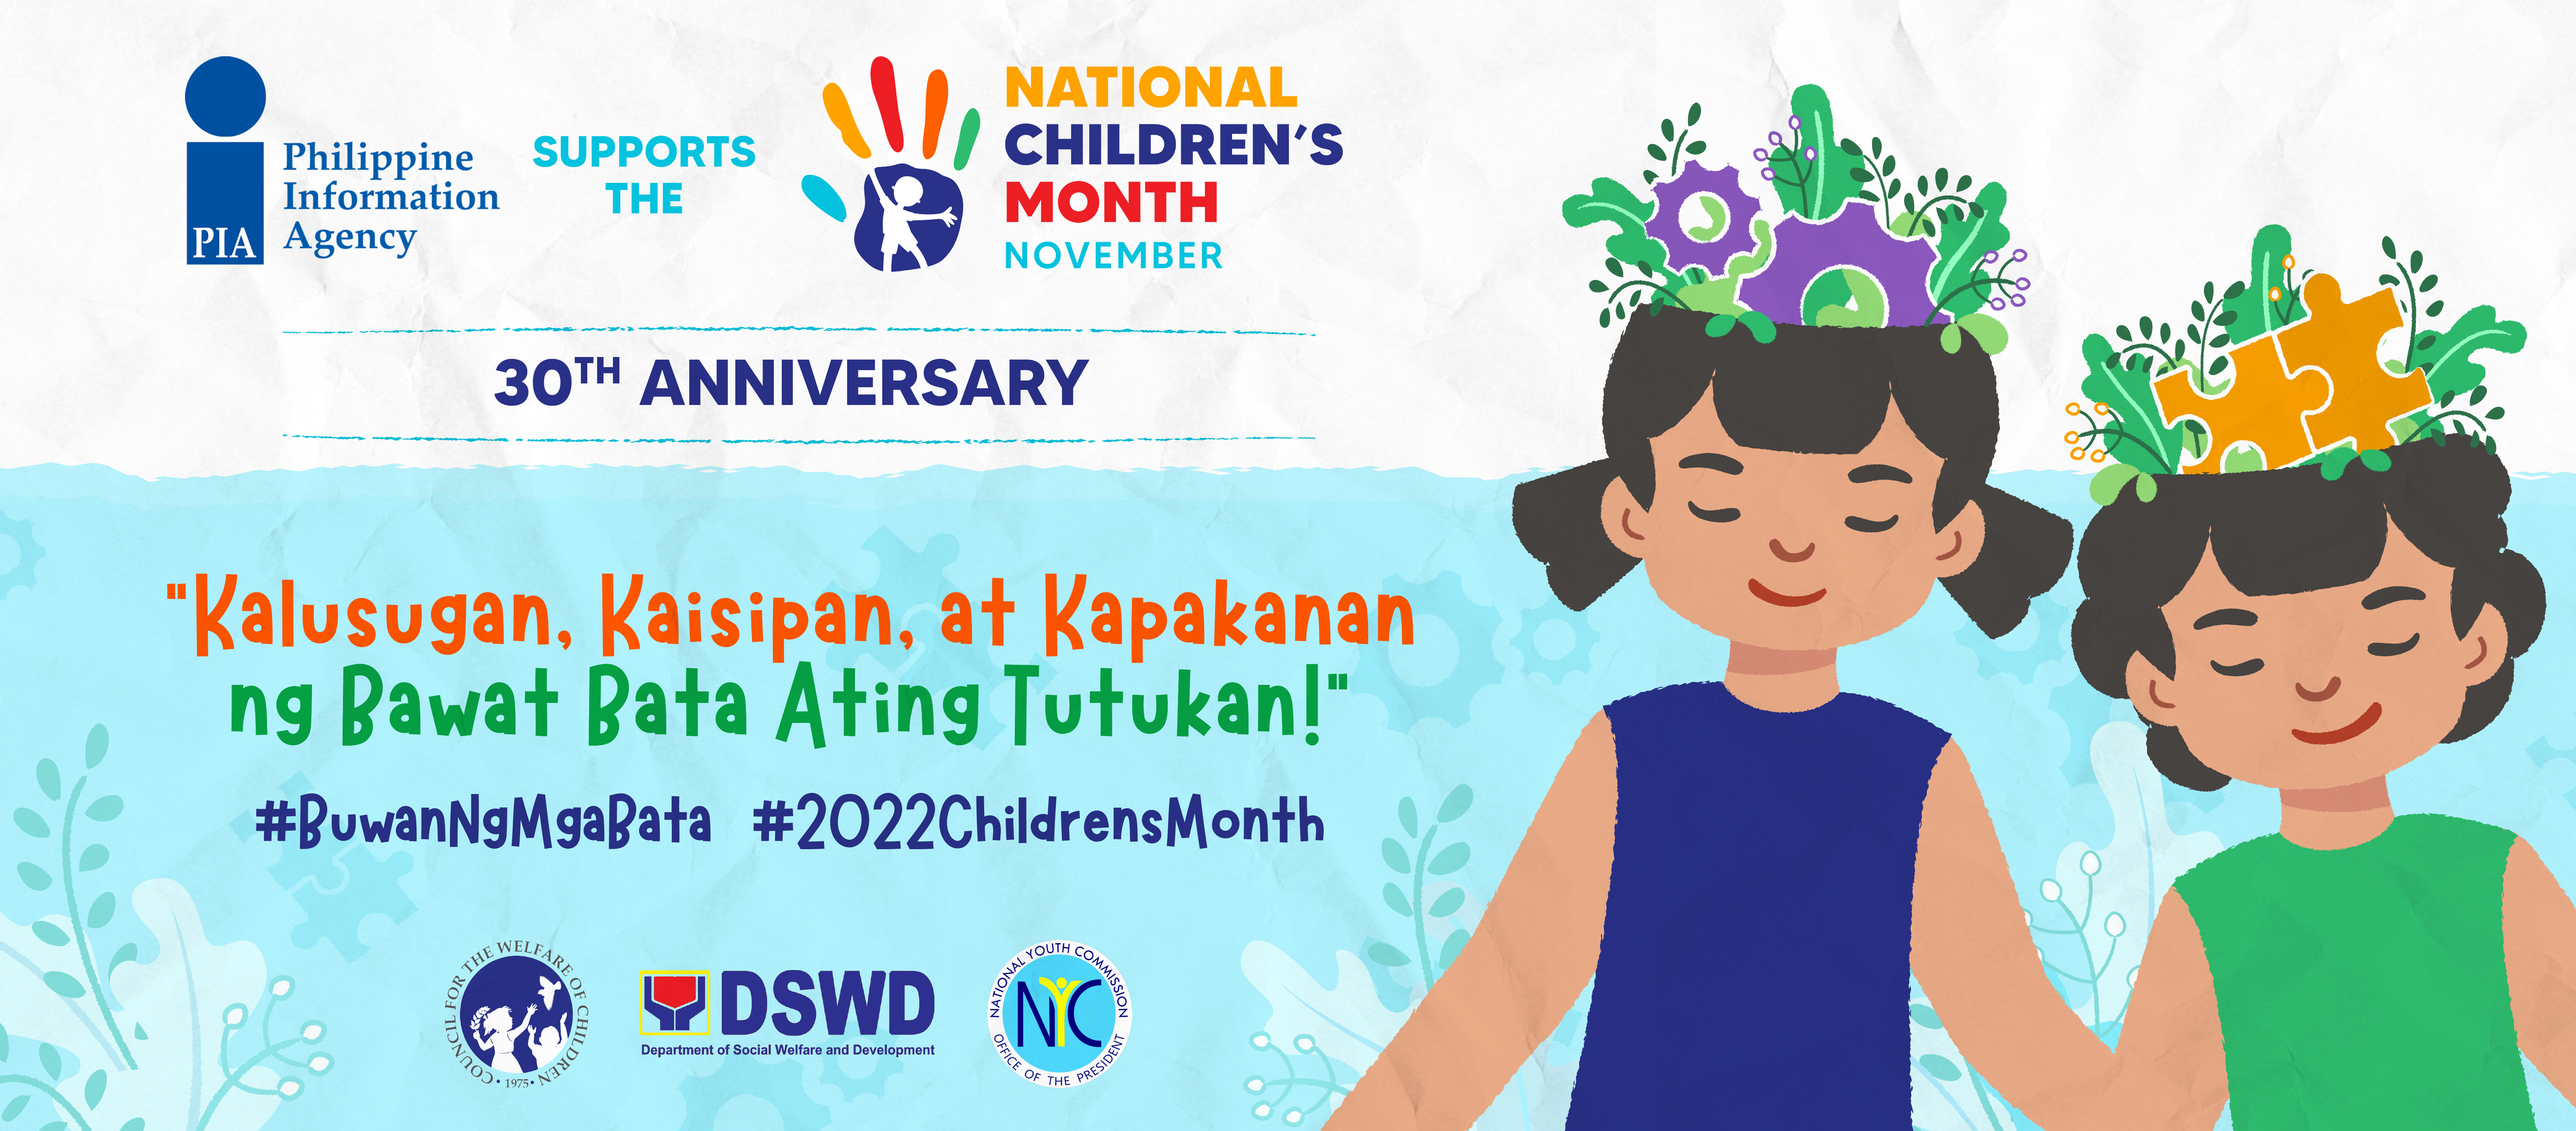 National Children's Month celebration